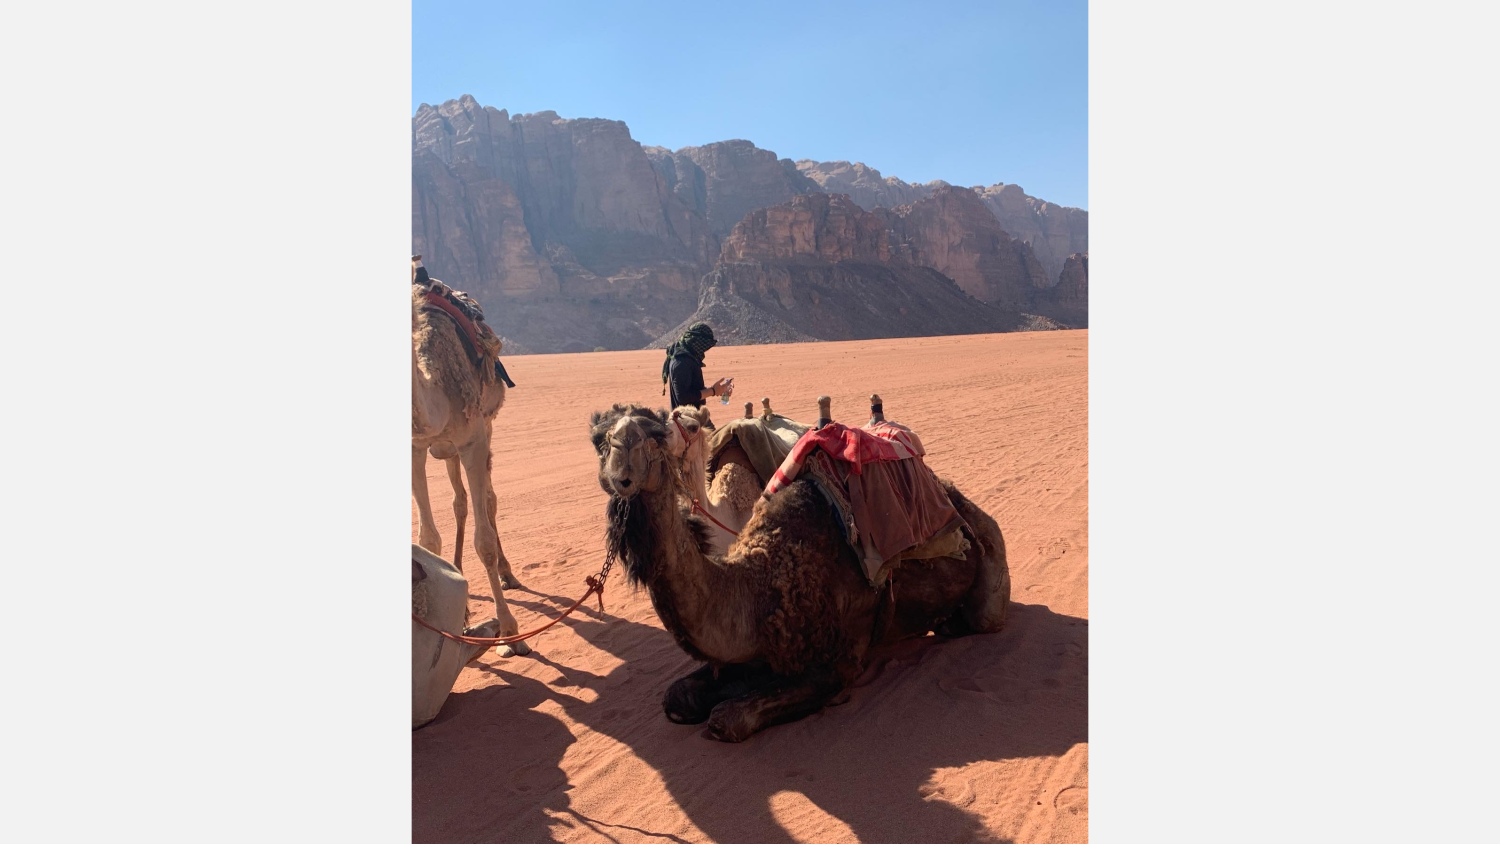 A camel in Jordan